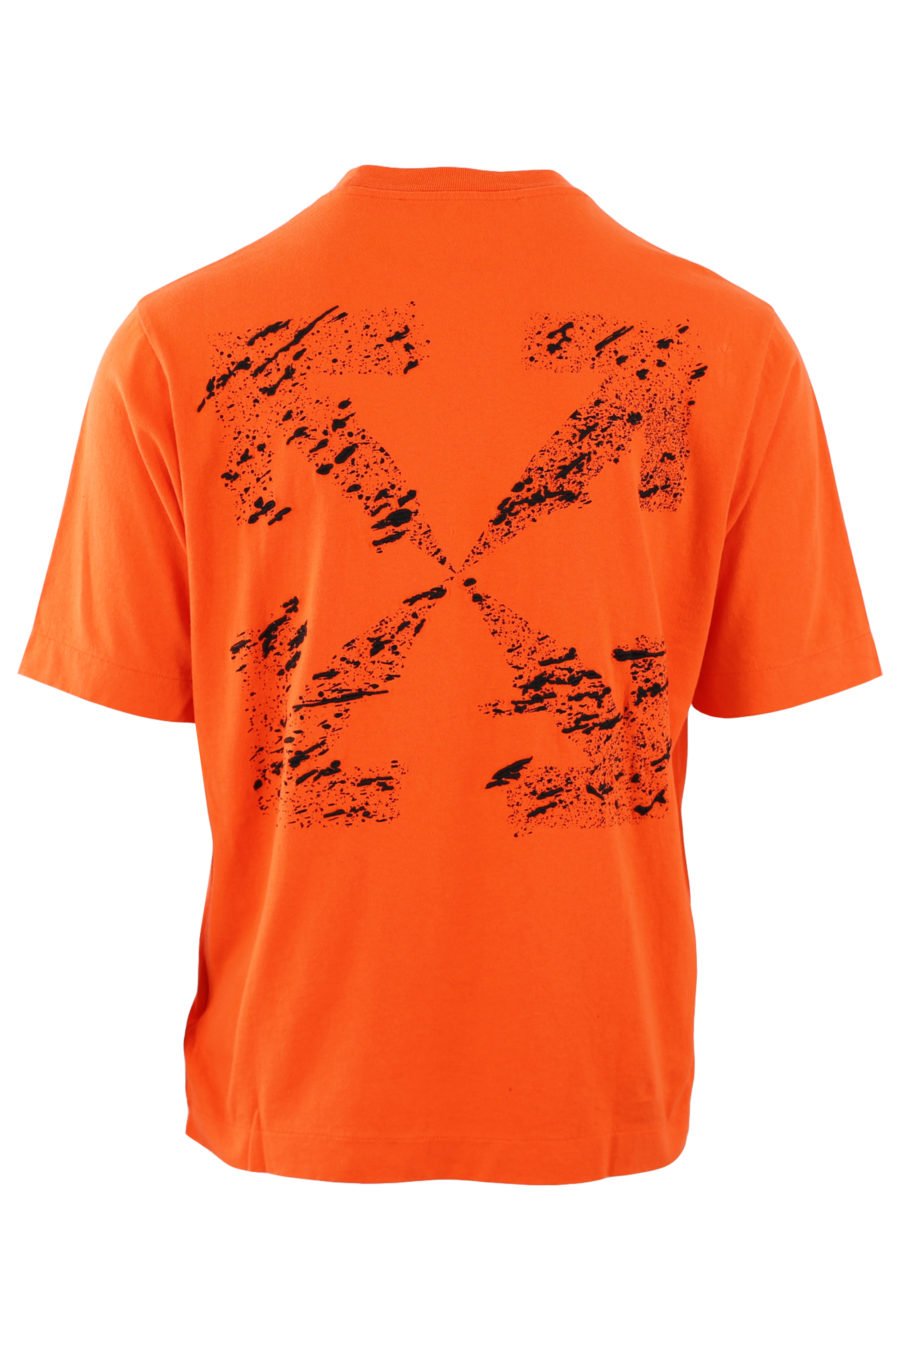 Camiseta naranja con logo bordado "Arrows" - IMG1 9209